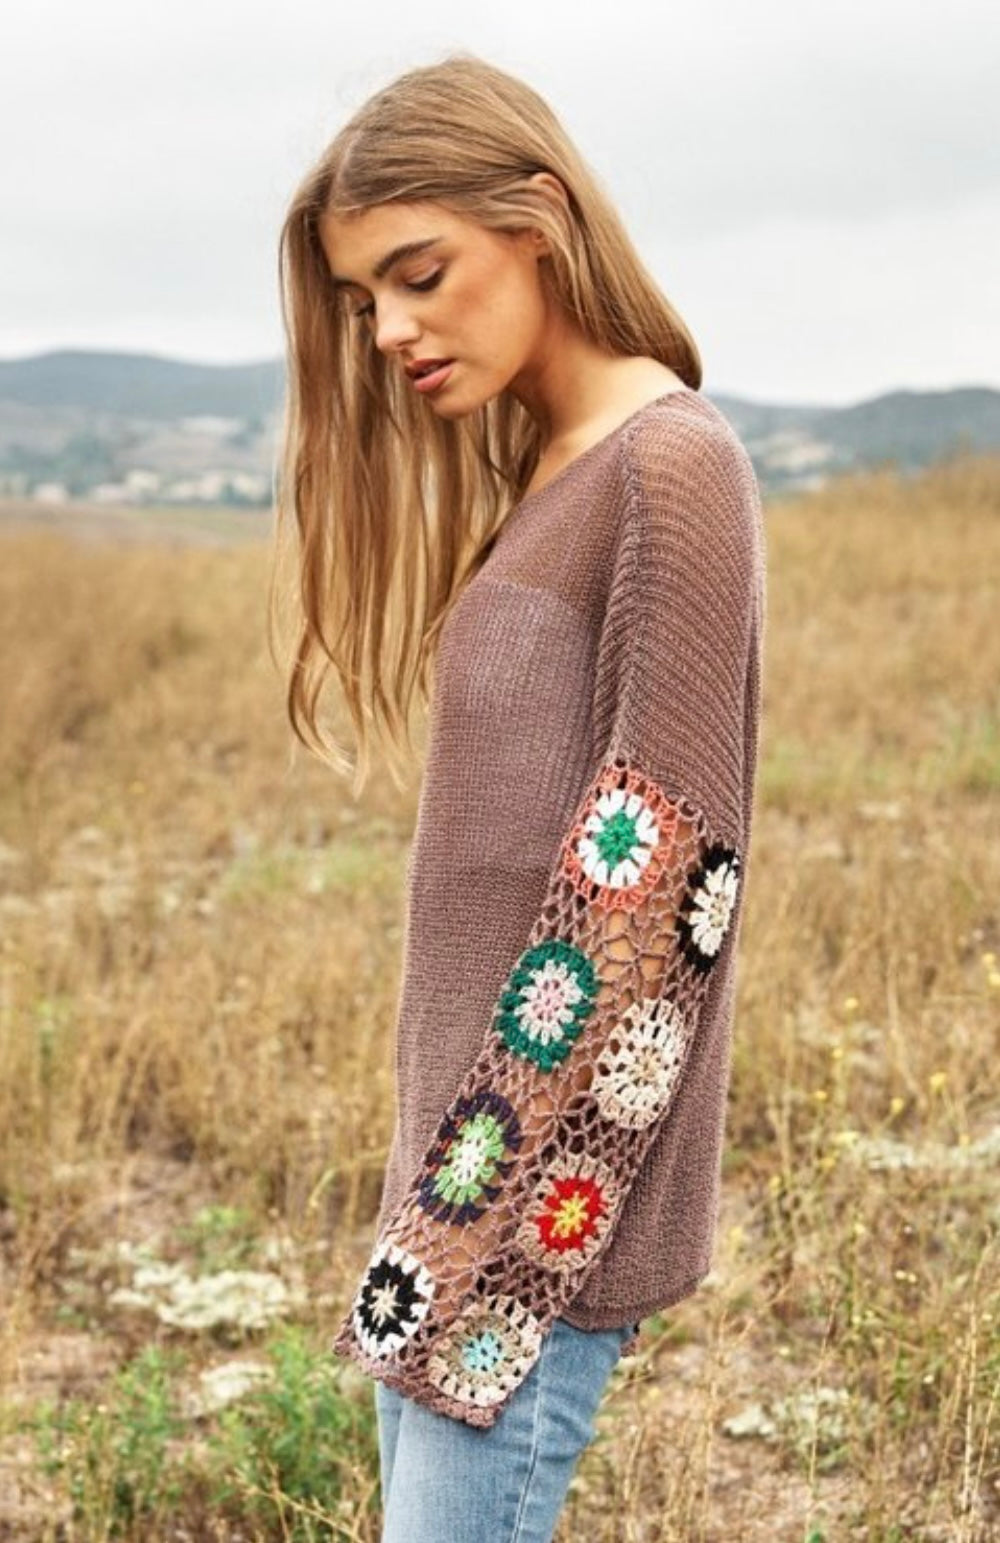 Laney Loose Knit Sweater